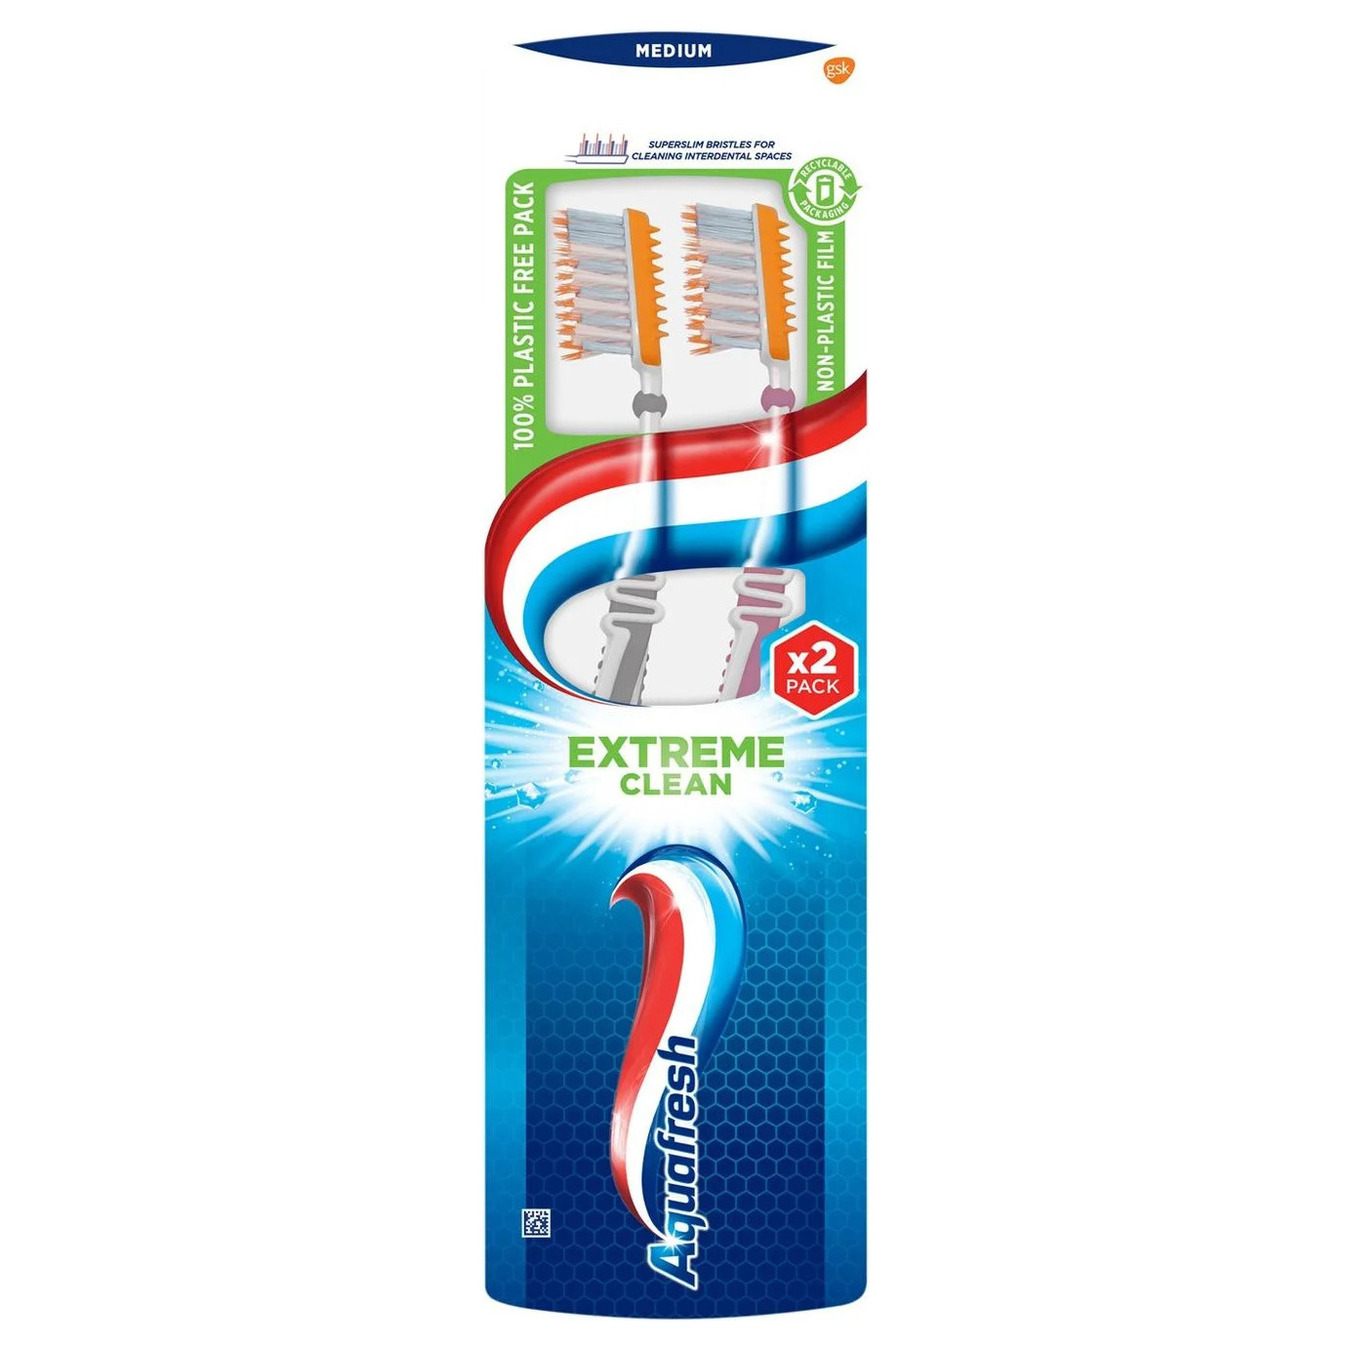 Toothbrush Aquafresh Extreme Clean Medium 1+1